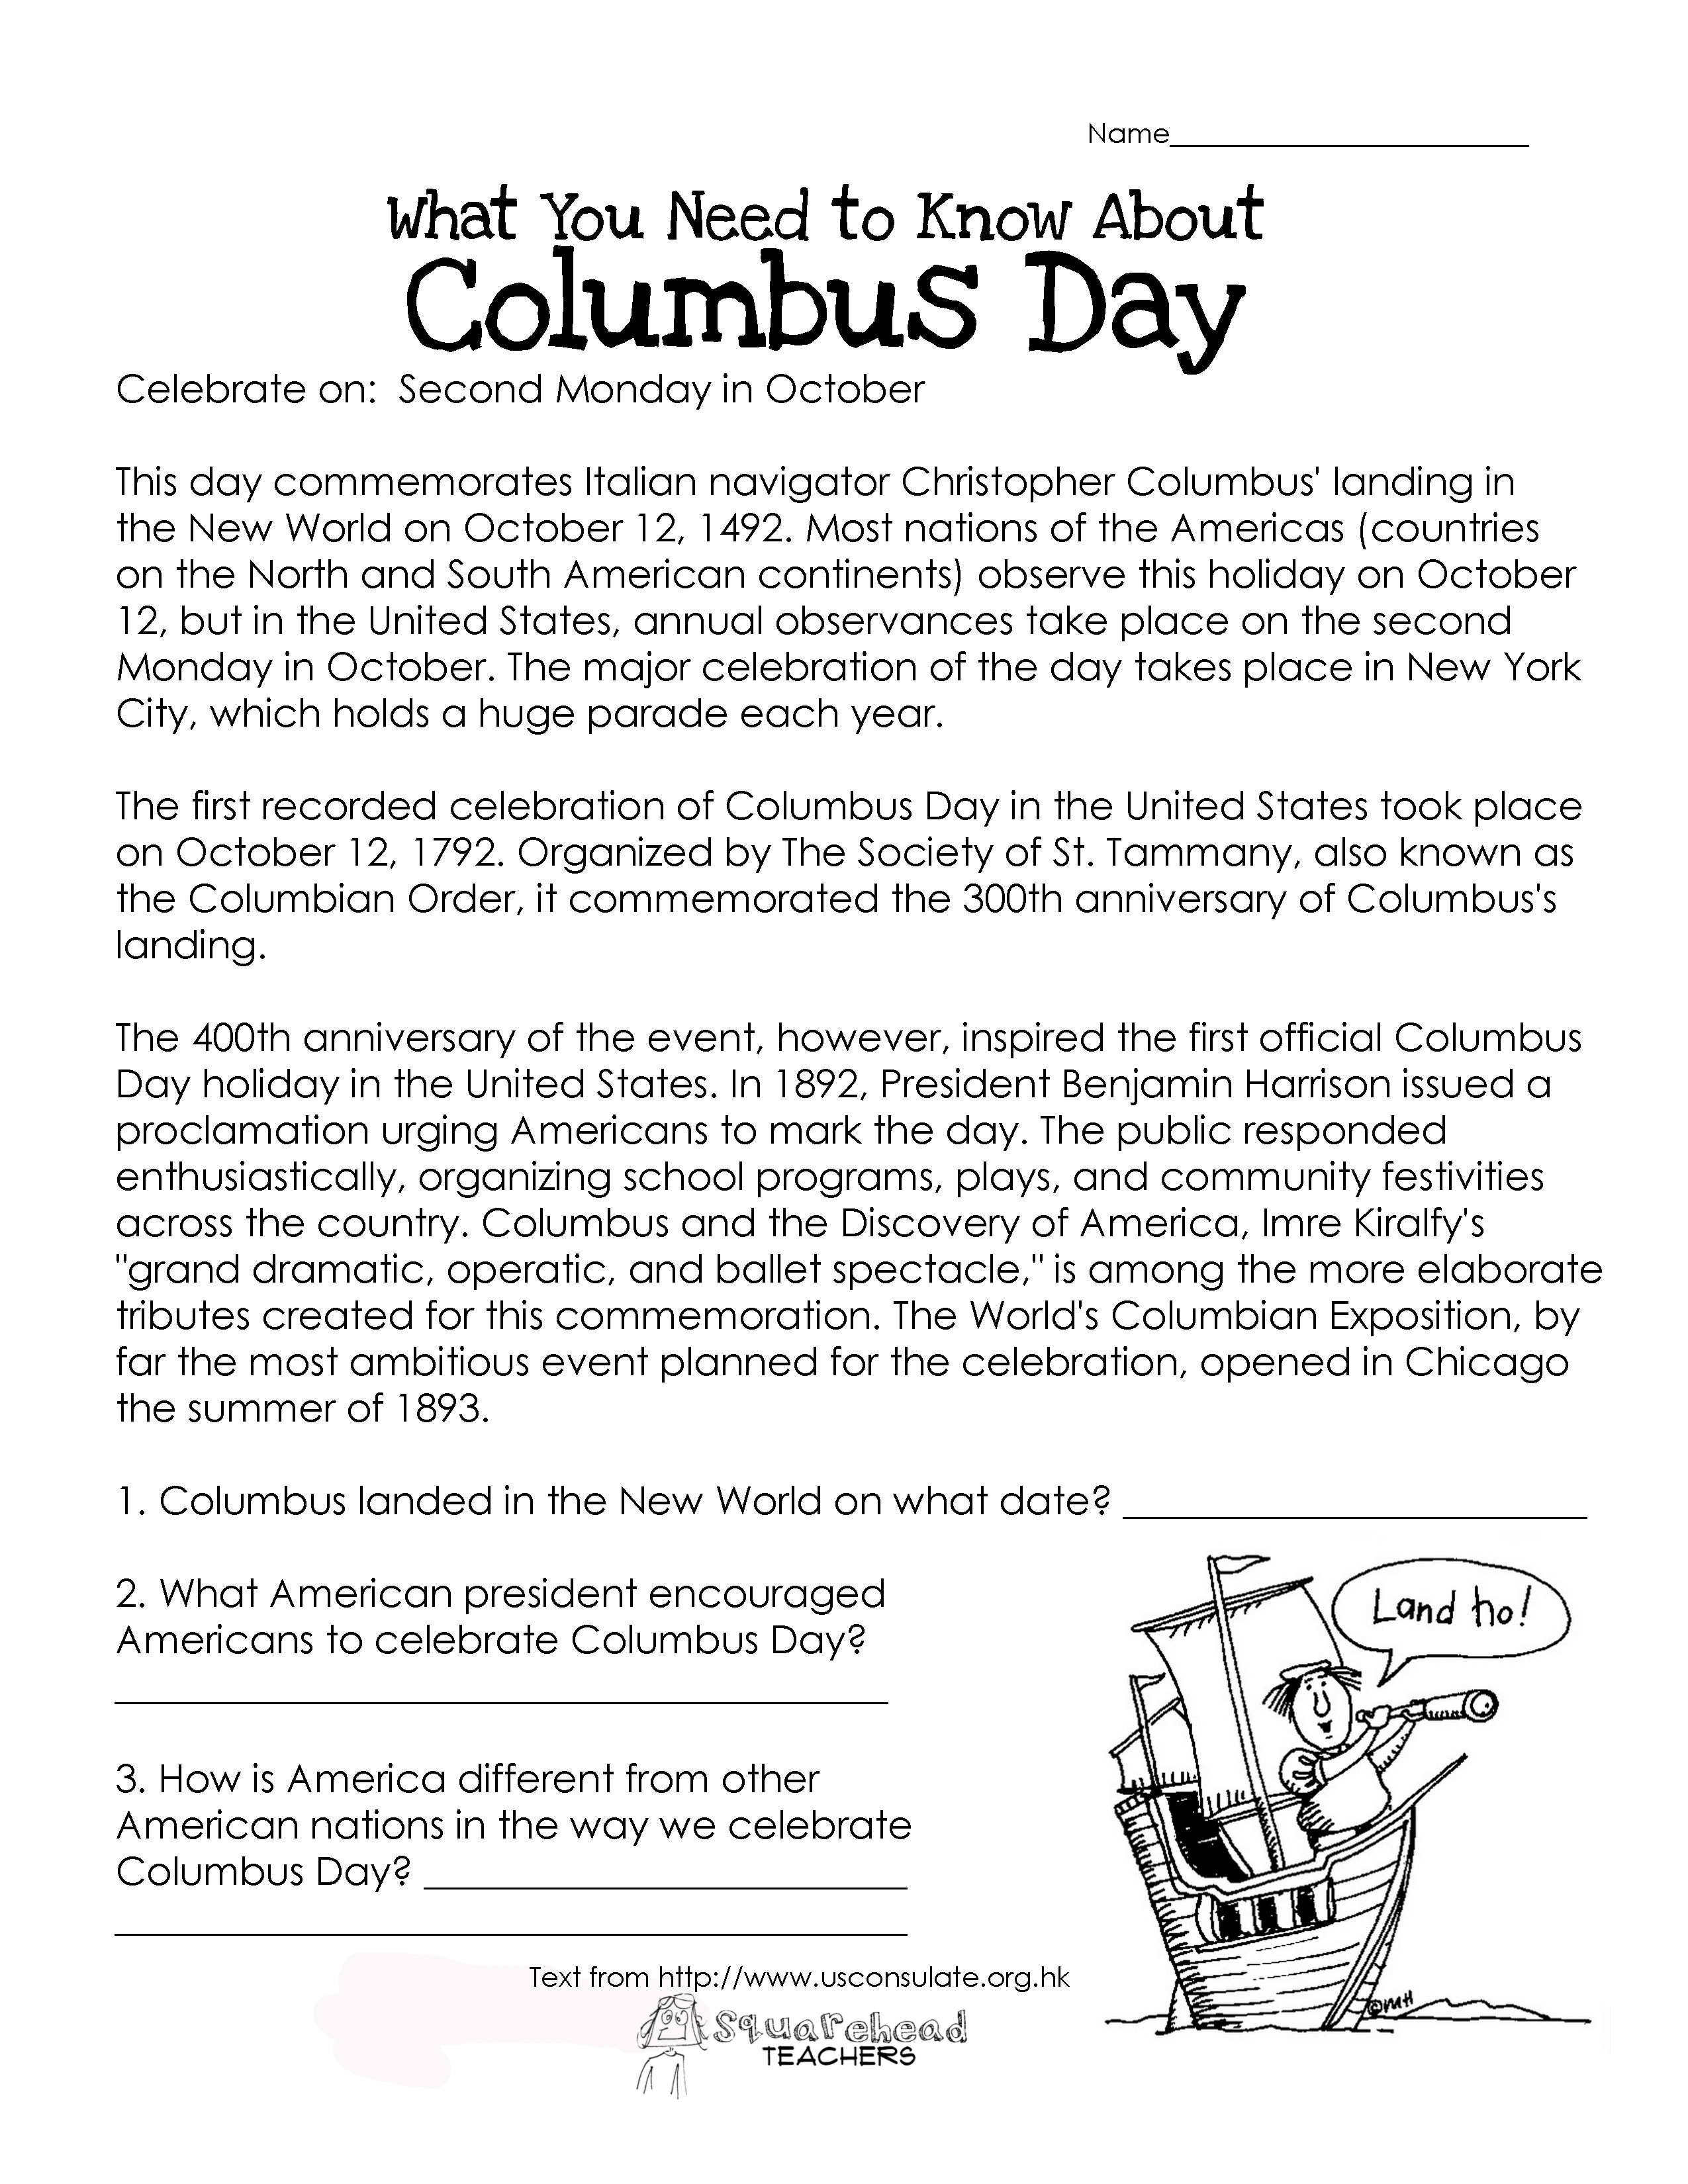 Columbus Day Worksheets Image